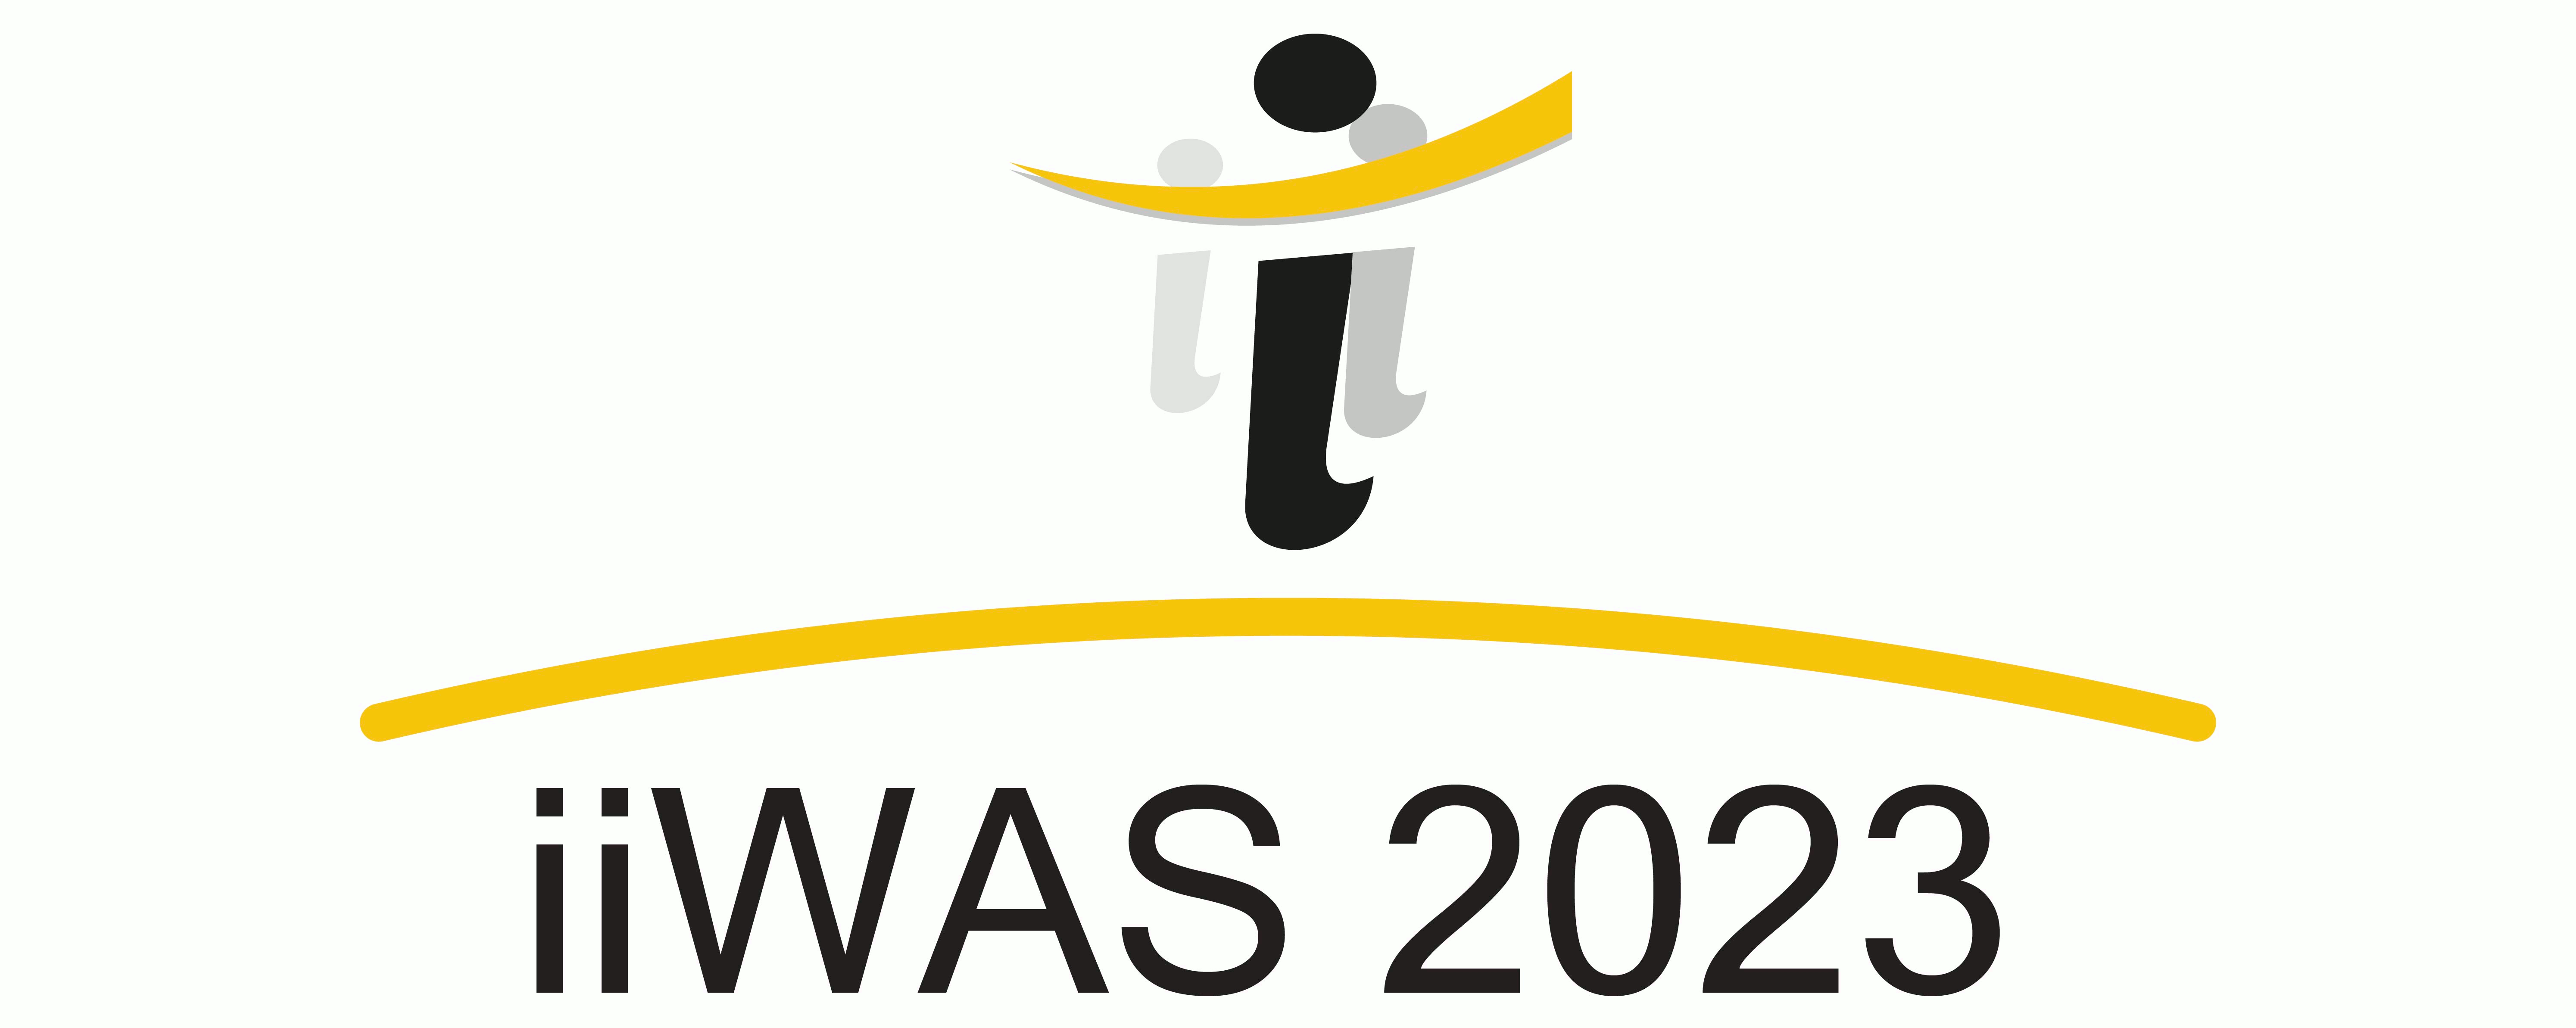 iiwas 2023 logo